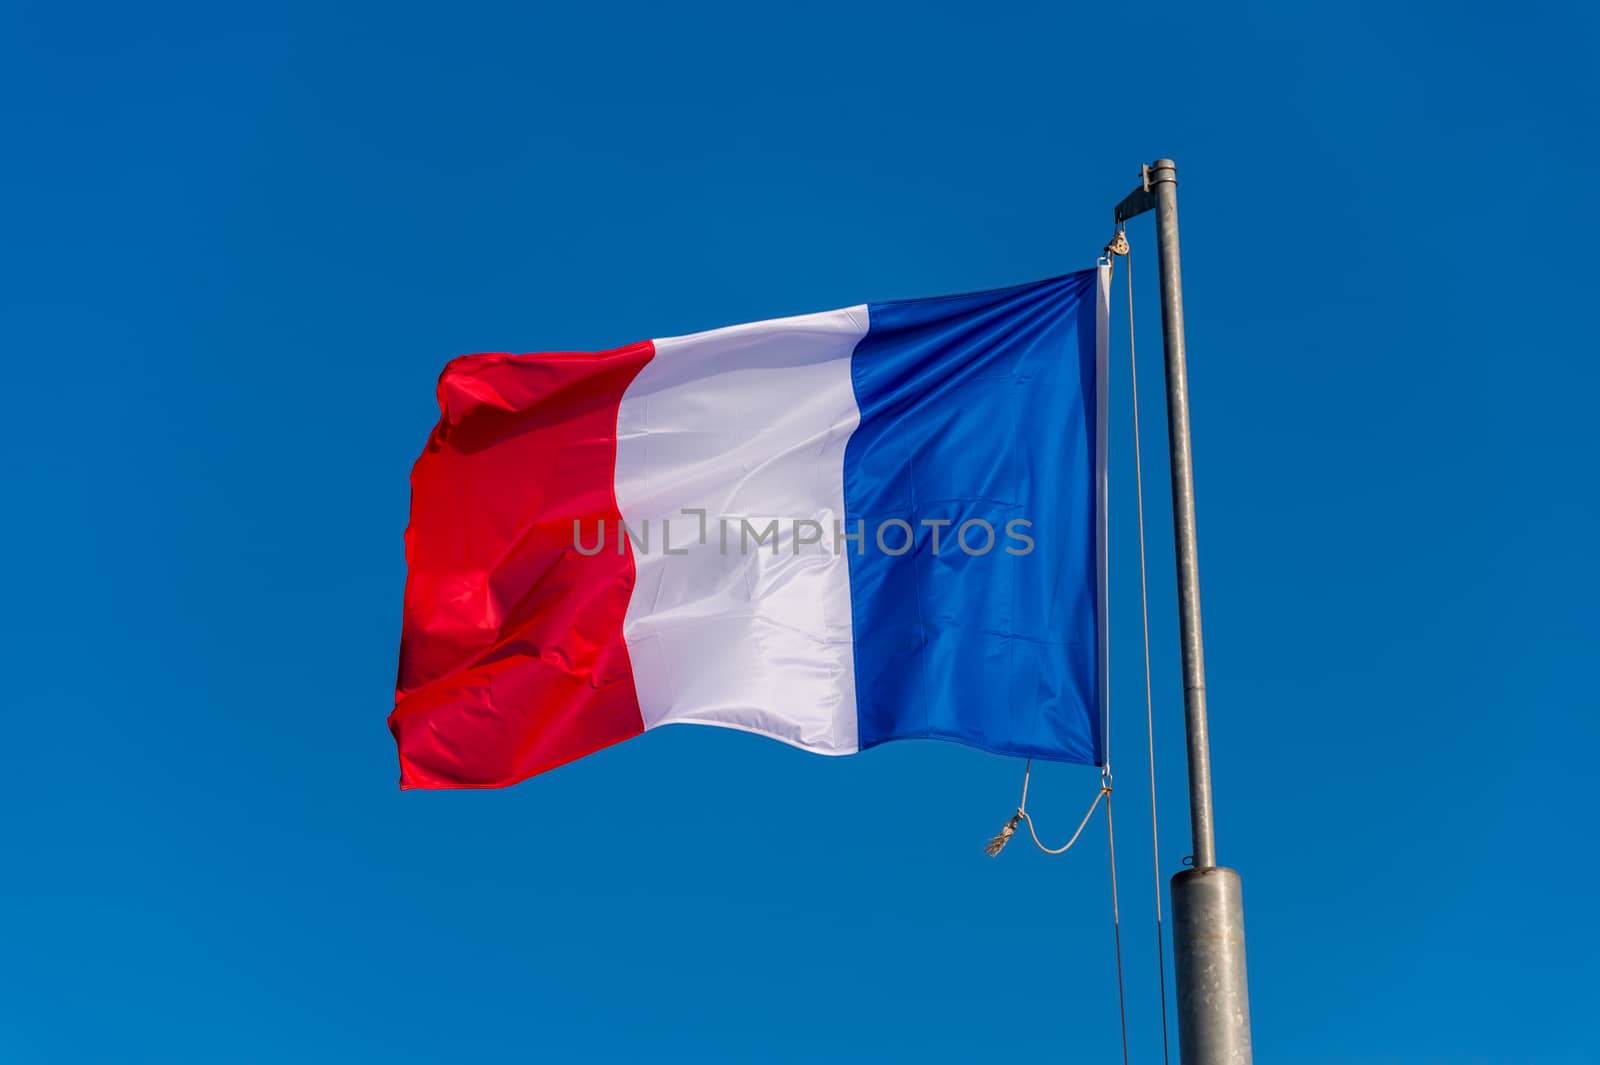 French flag waving against blue sky in Boulogne sur Mer, France.